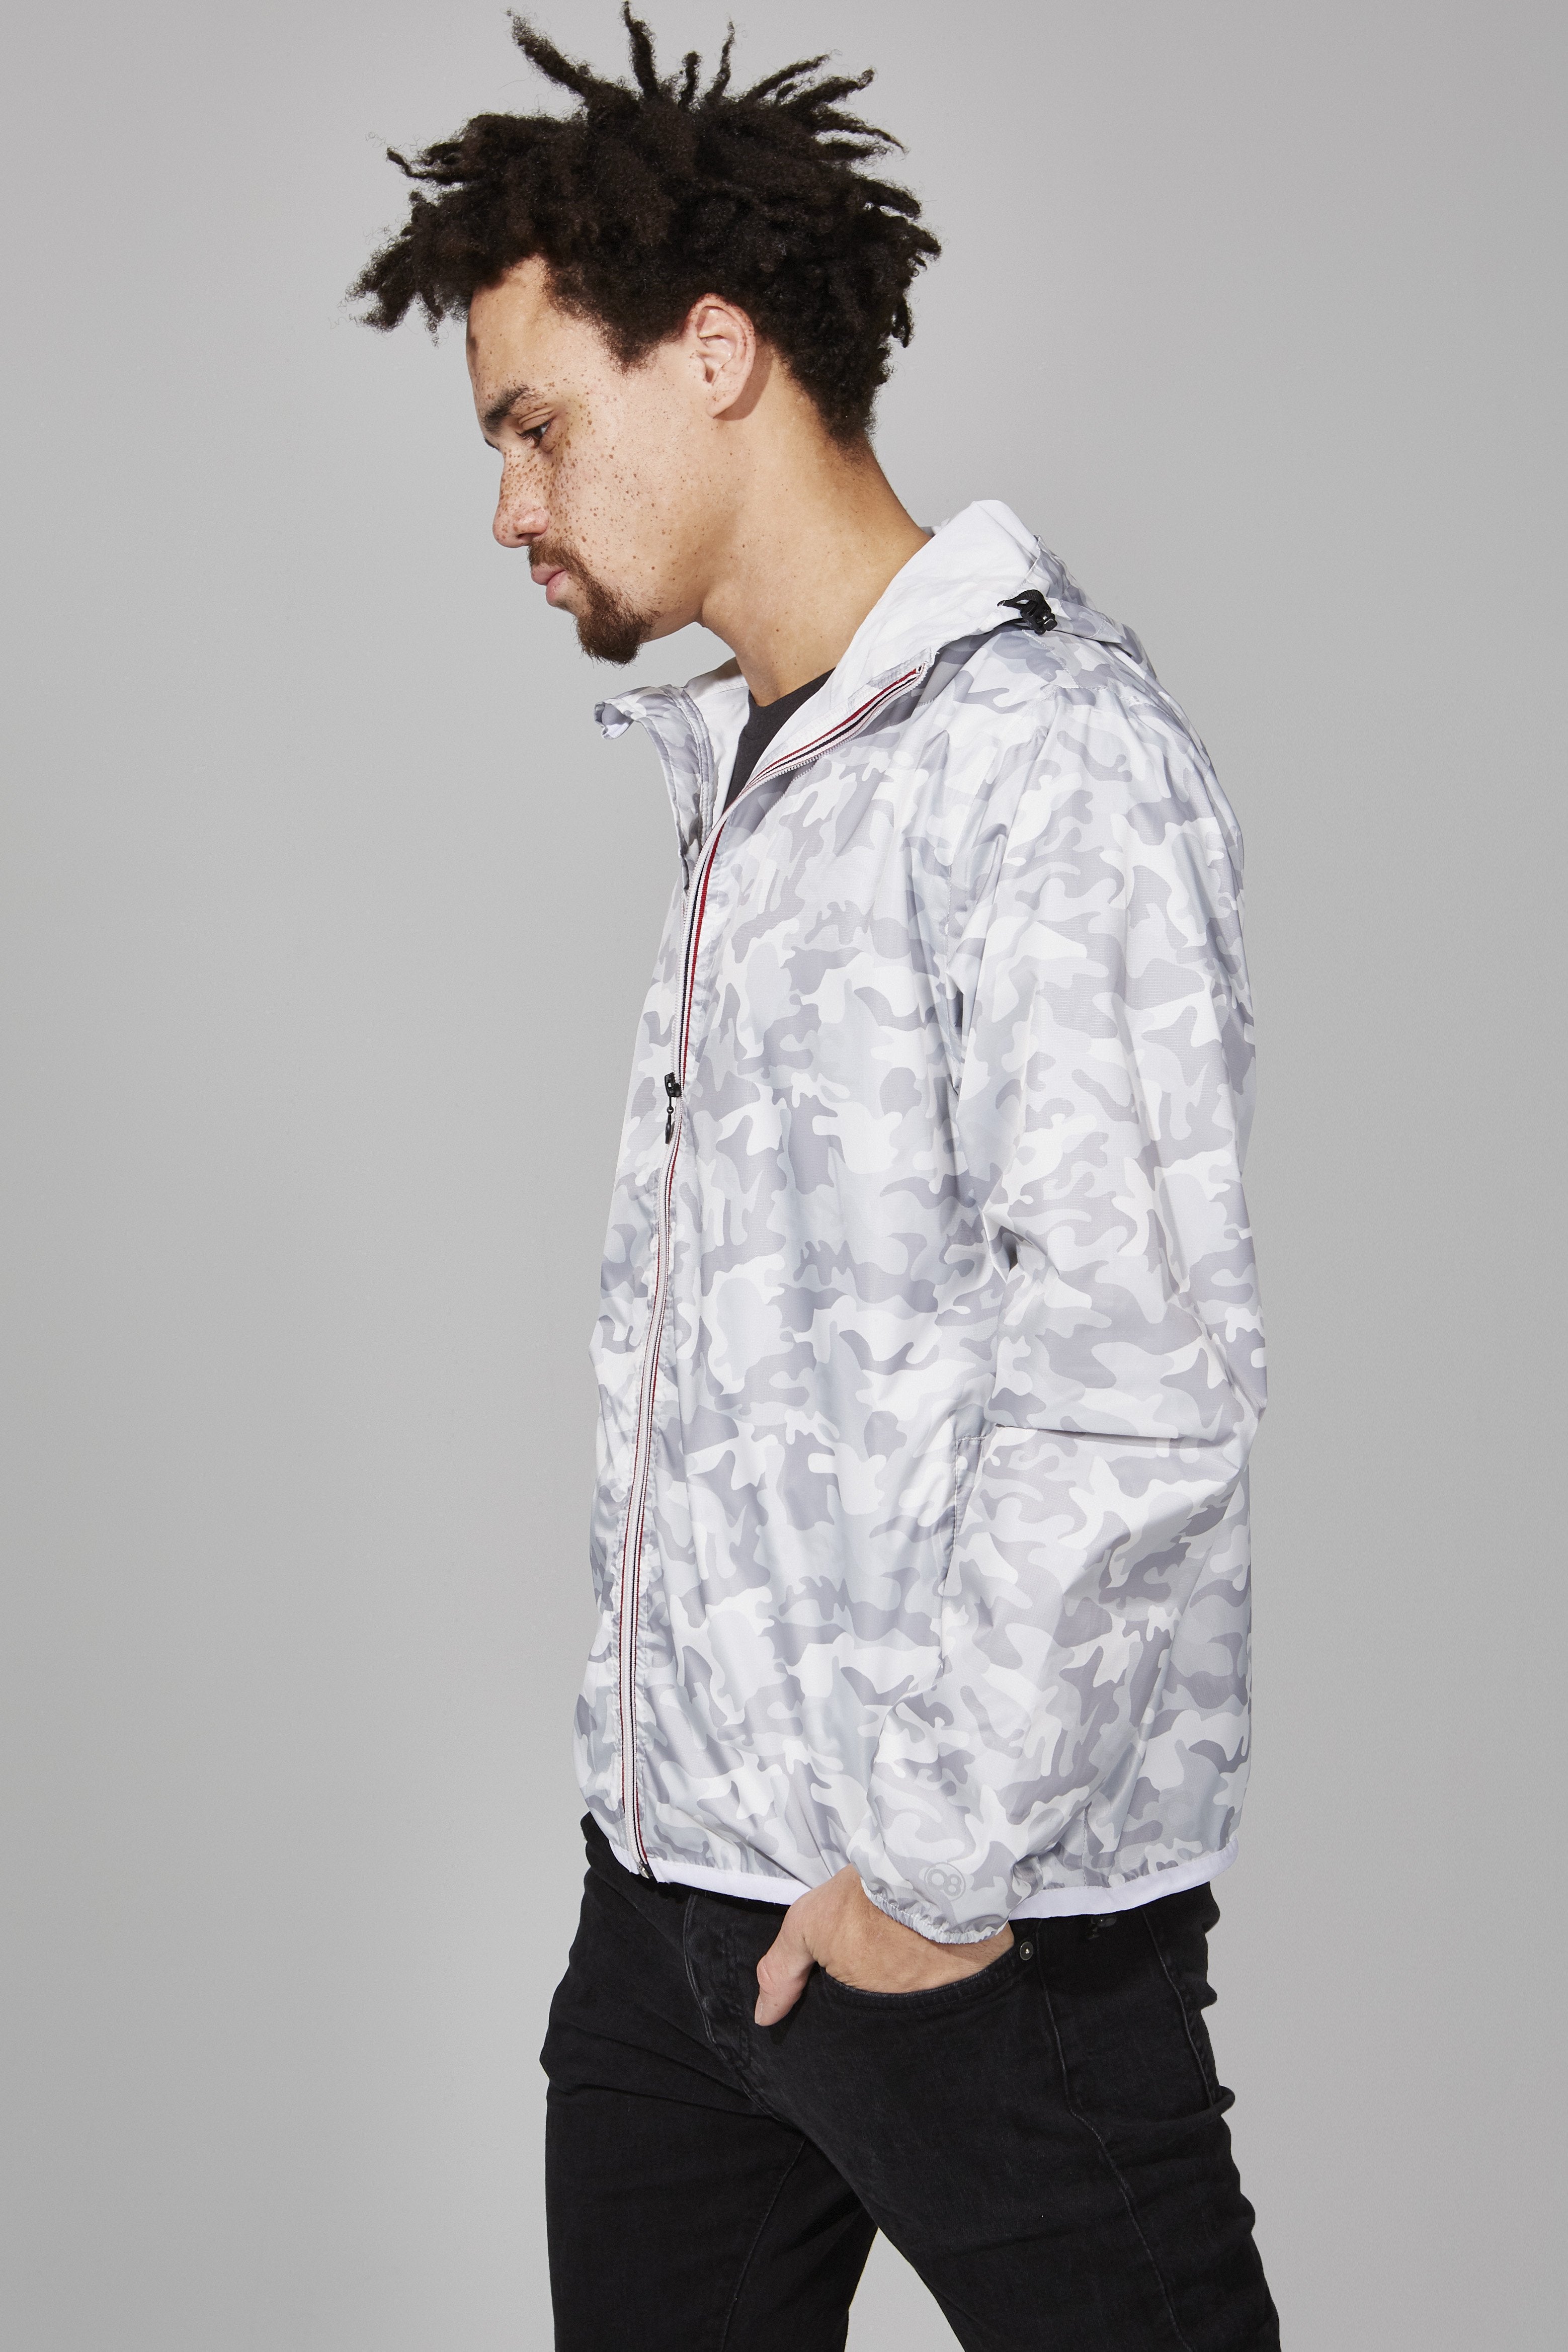 Max Print - White Camo Full Zip Packable Rain Jacket - O8lifestyle.